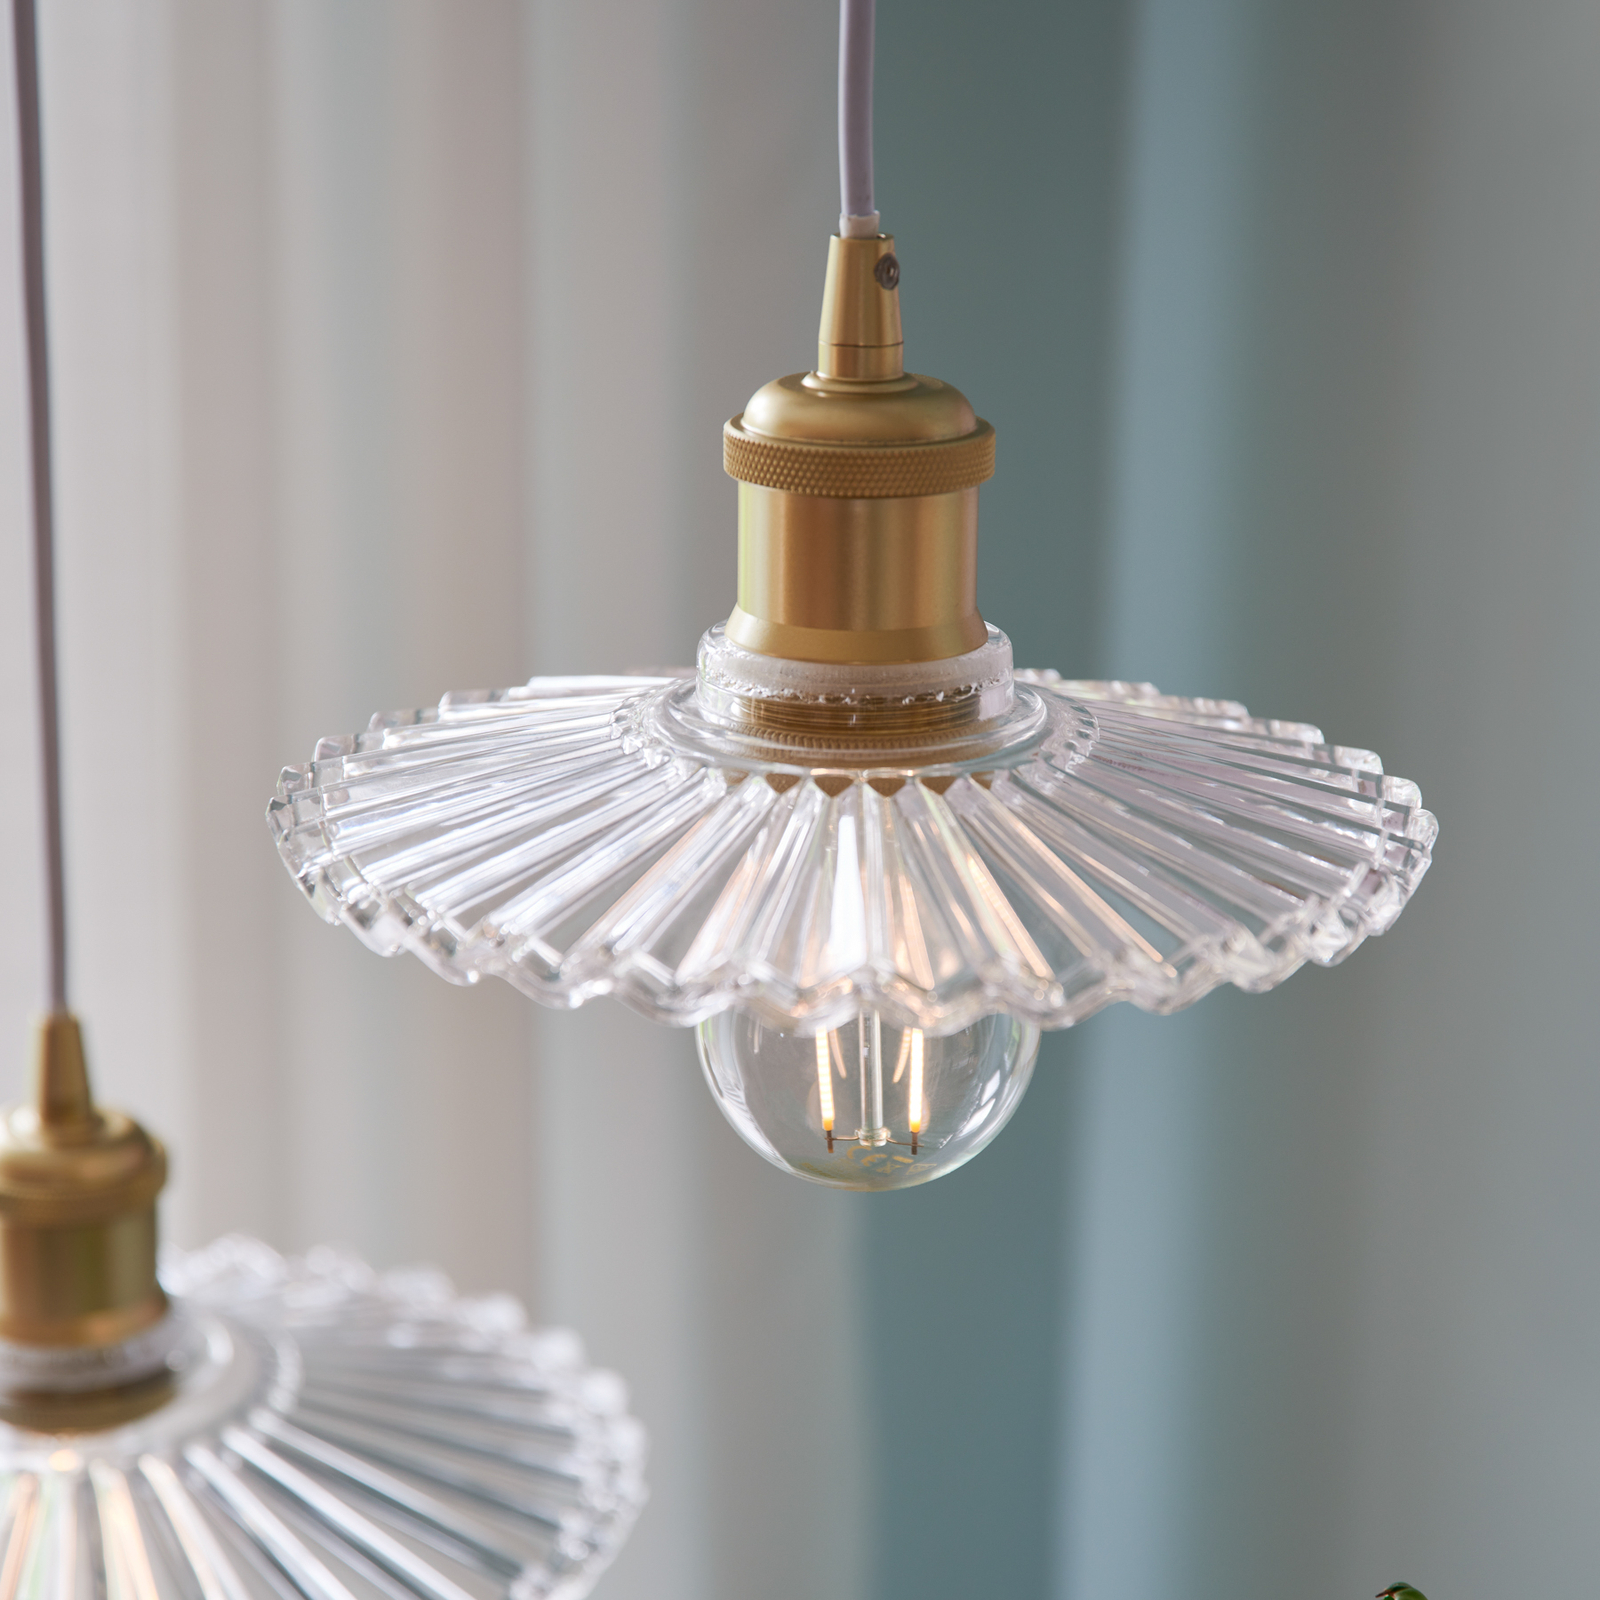 Hanglamp Torina in vintage ontwerp, Ø 24 cm